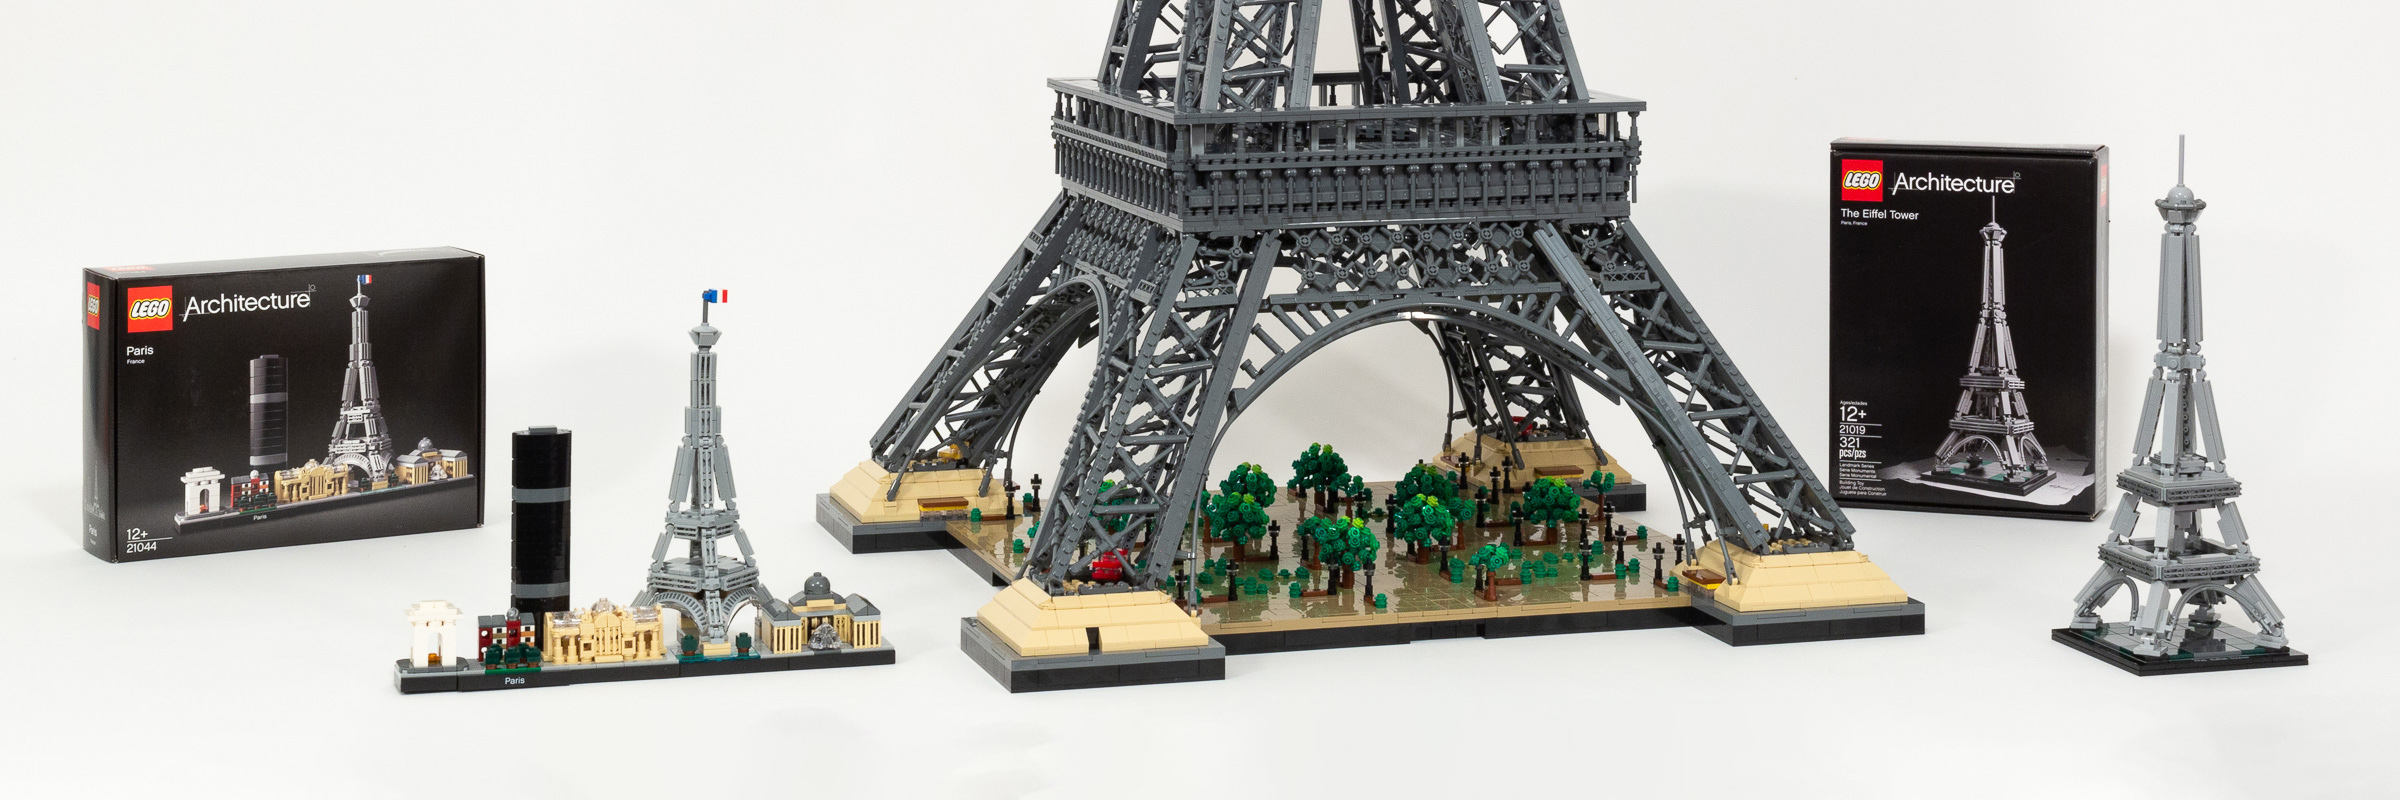 LEGO Architecture The Eiffel Tower Set 21019 - US